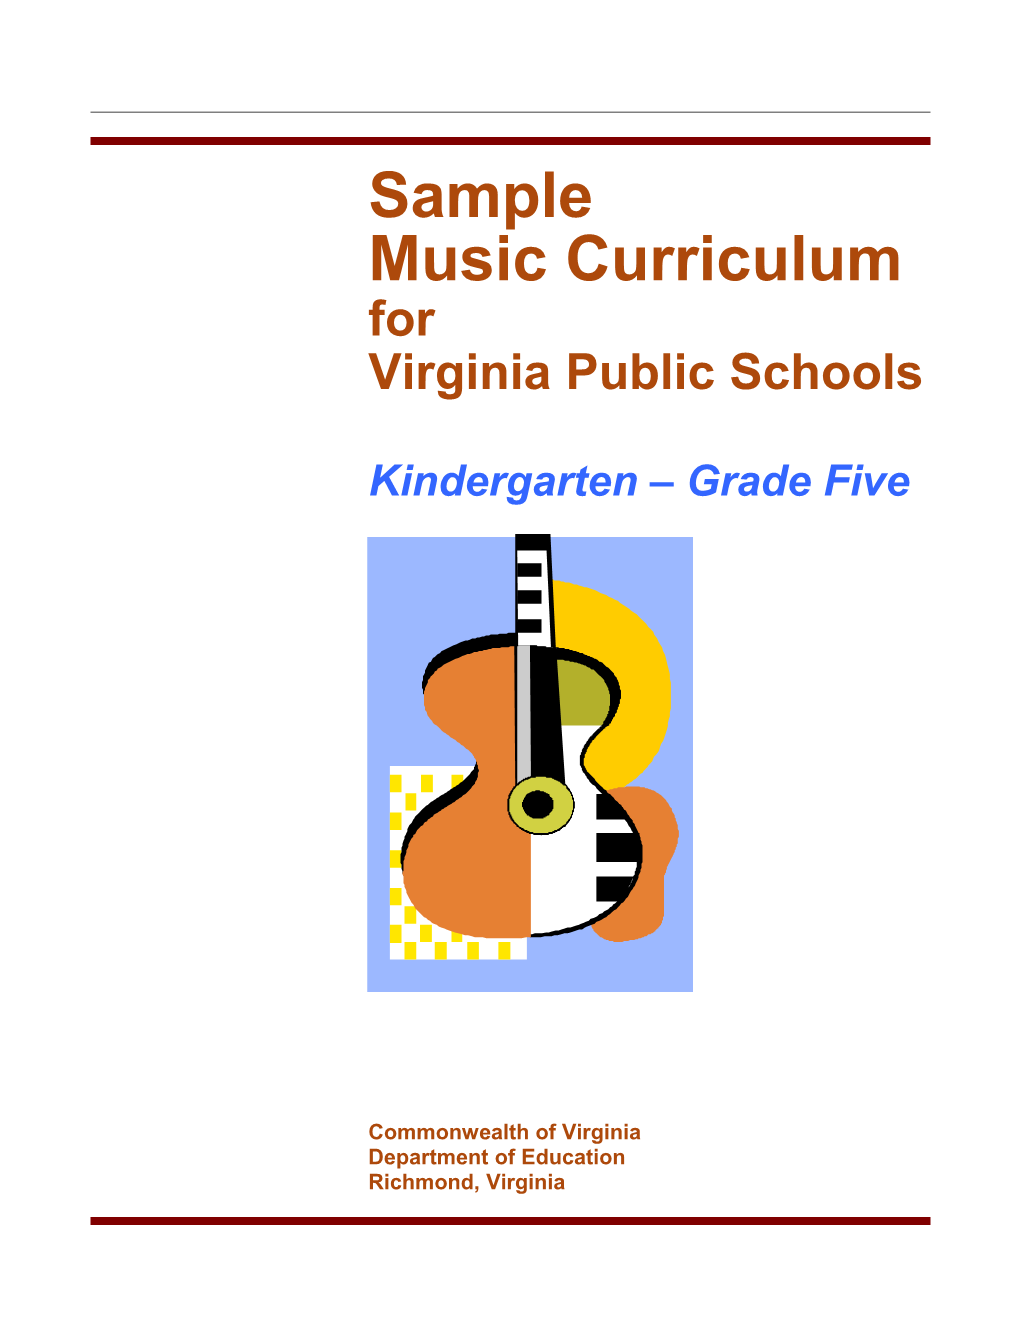 Sample Music Curriculum for Virginia Public Schools: Kindergarten Grade Five